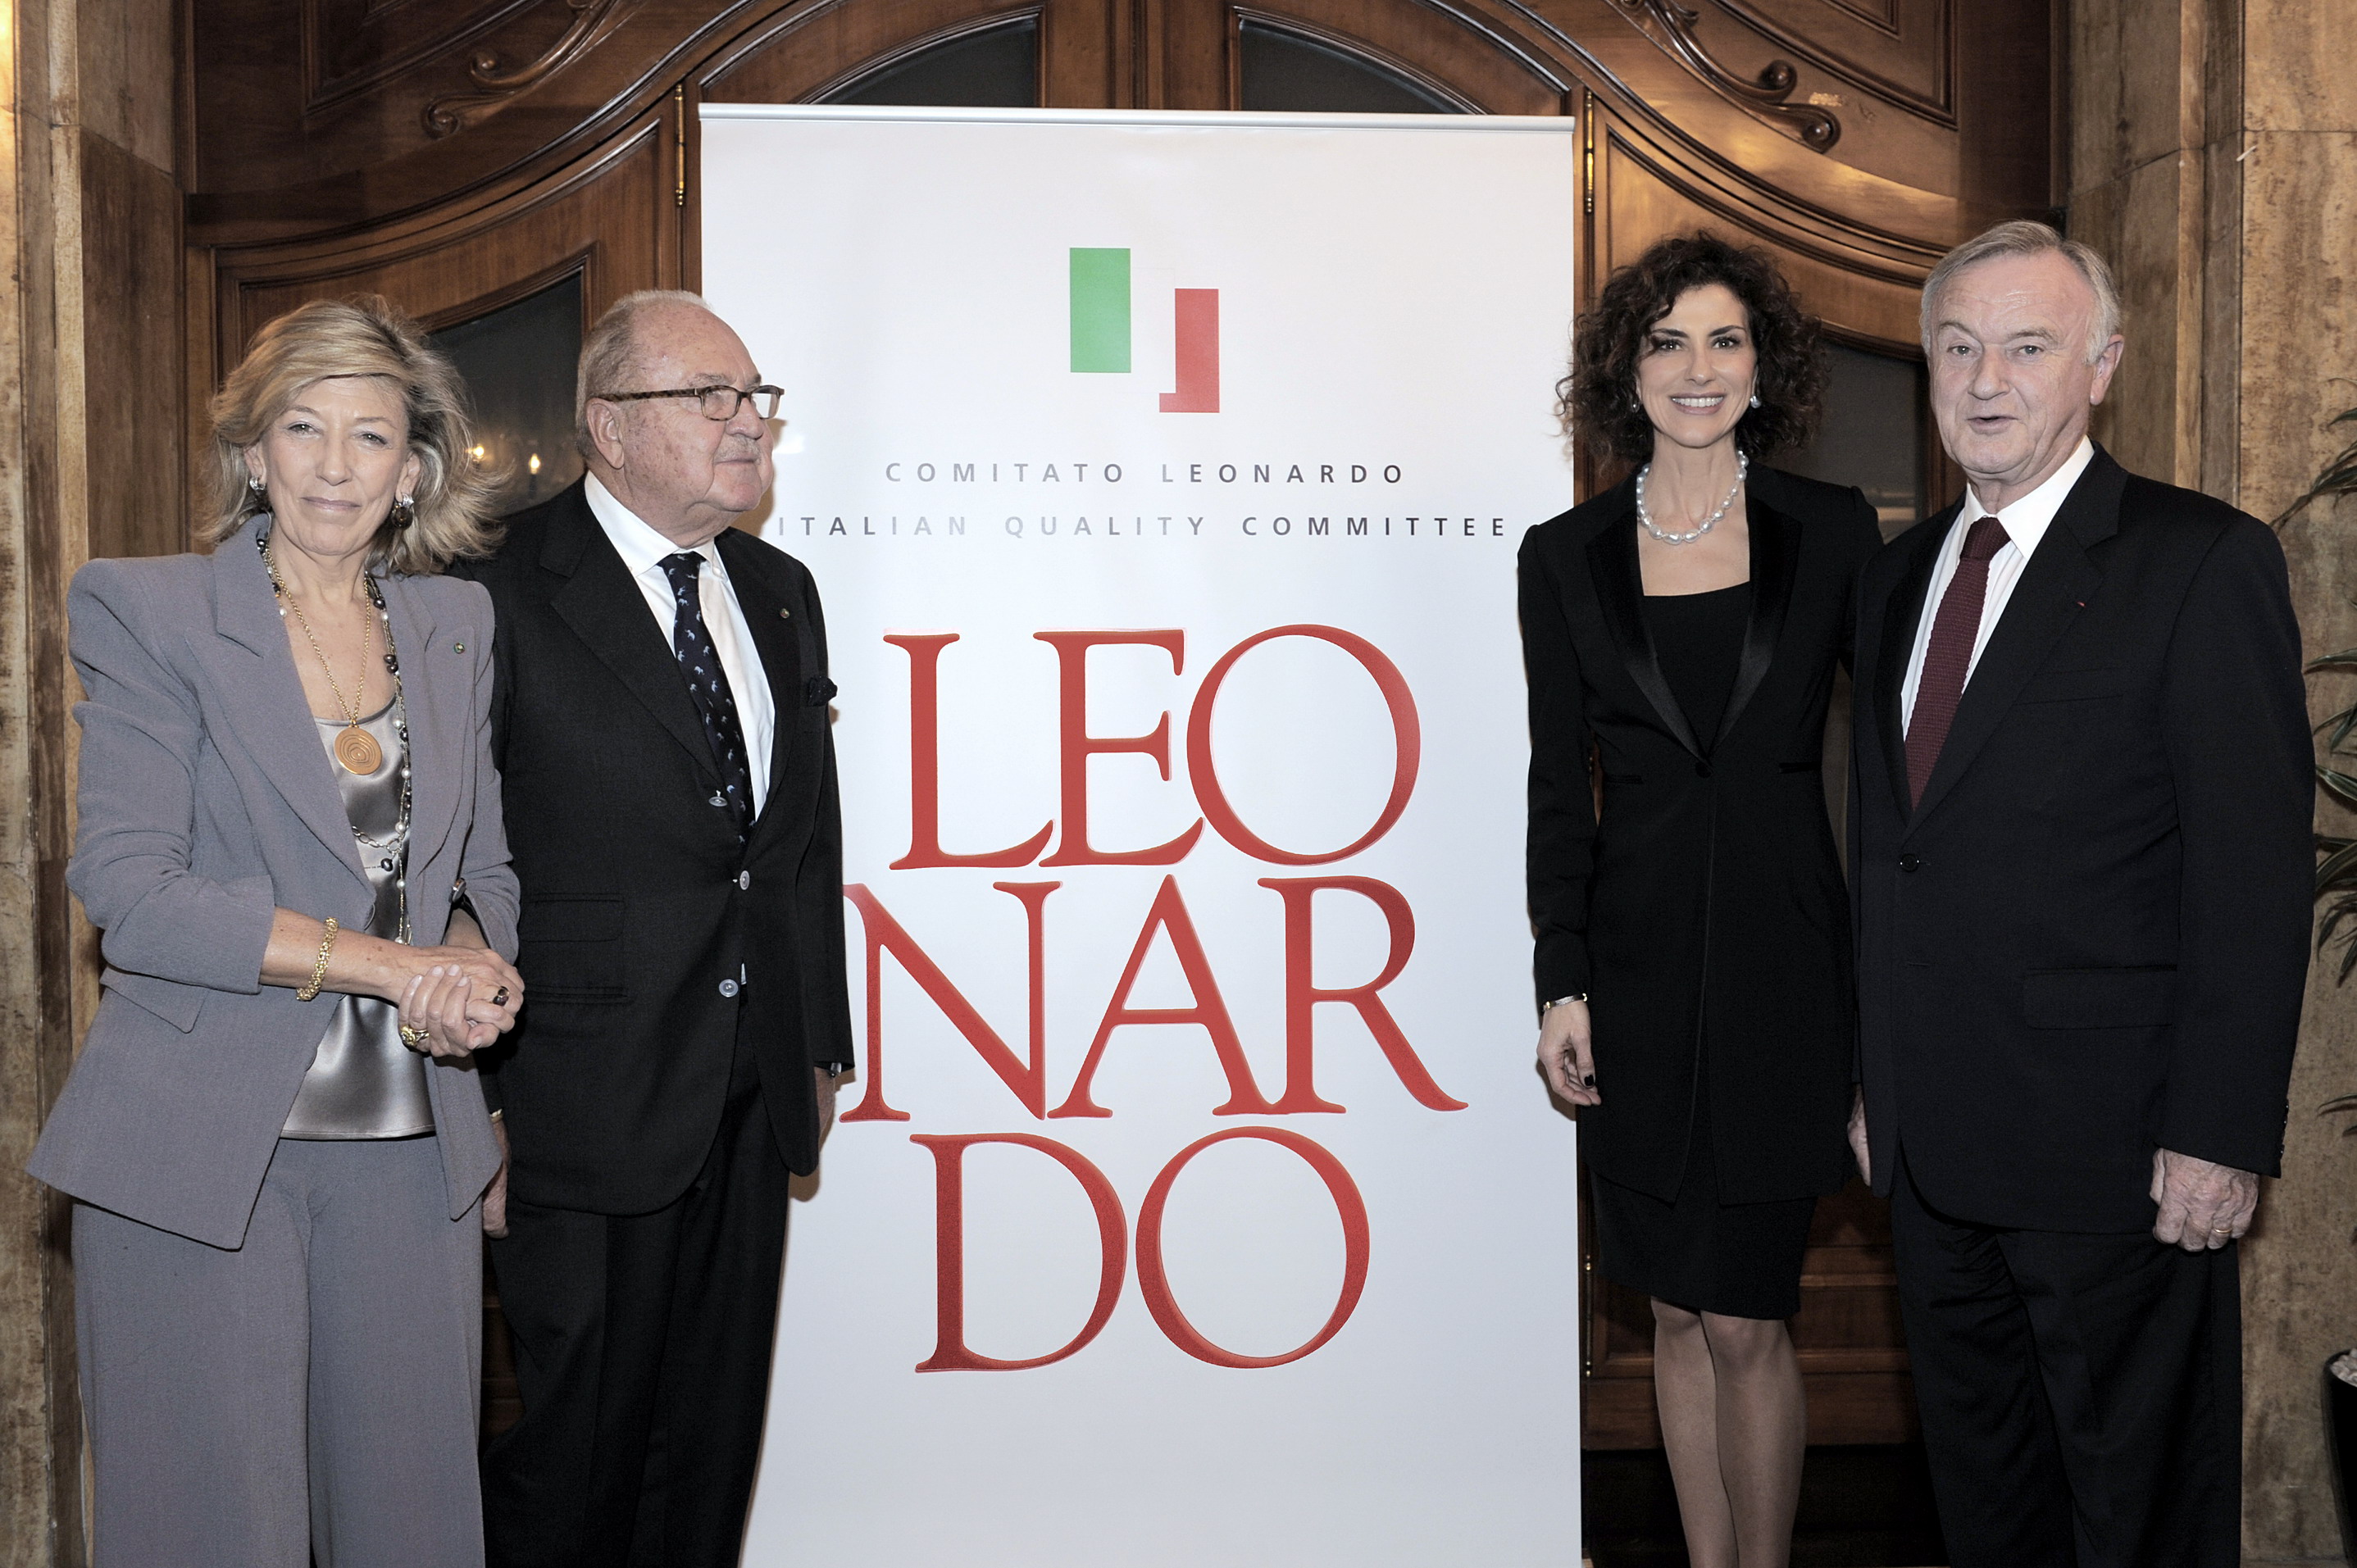 Leonardo Committee Prize awarded at Quirinal Palace Ceremony on 25 January 2012